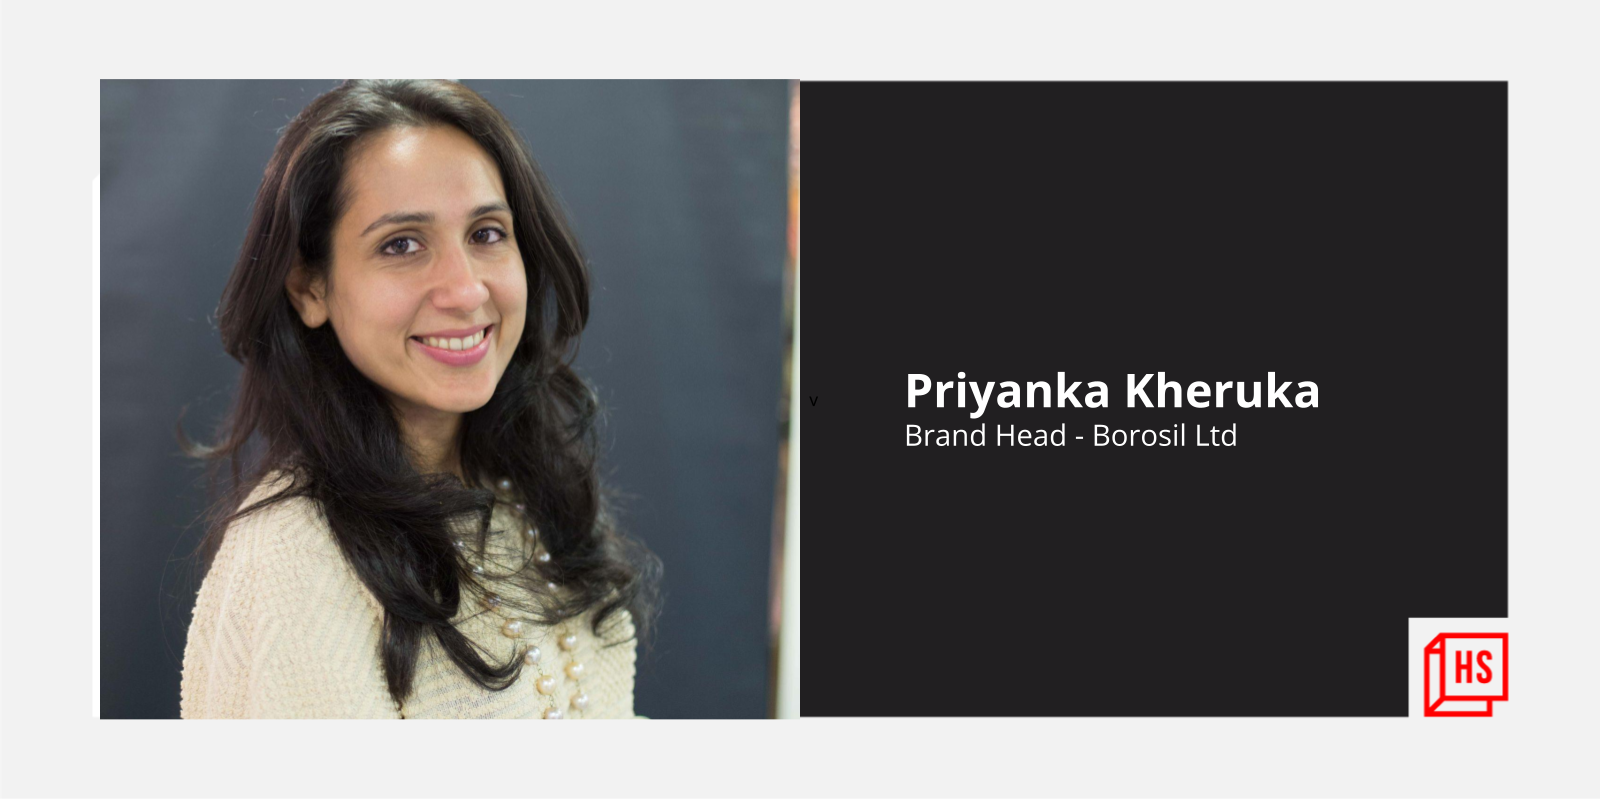 Beyond laboratory glassware: how Priyanka Kheruka wants Borosil to be an everyday-use brand

